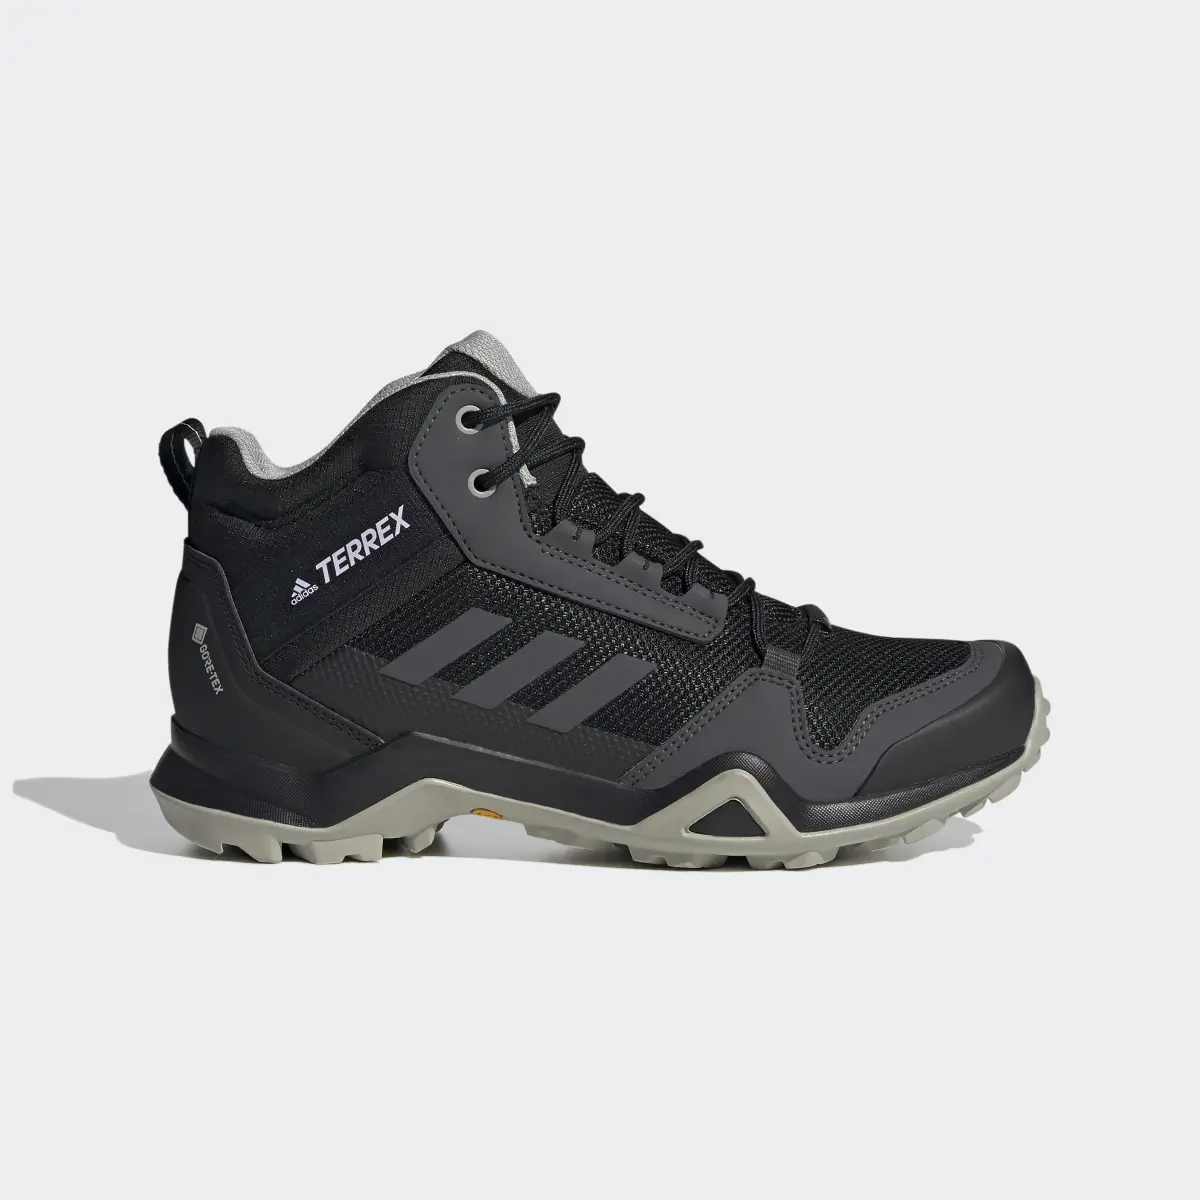 Adidas Sapatos de Caminhada AX3 Mid GORE-TEX TERREX. 2